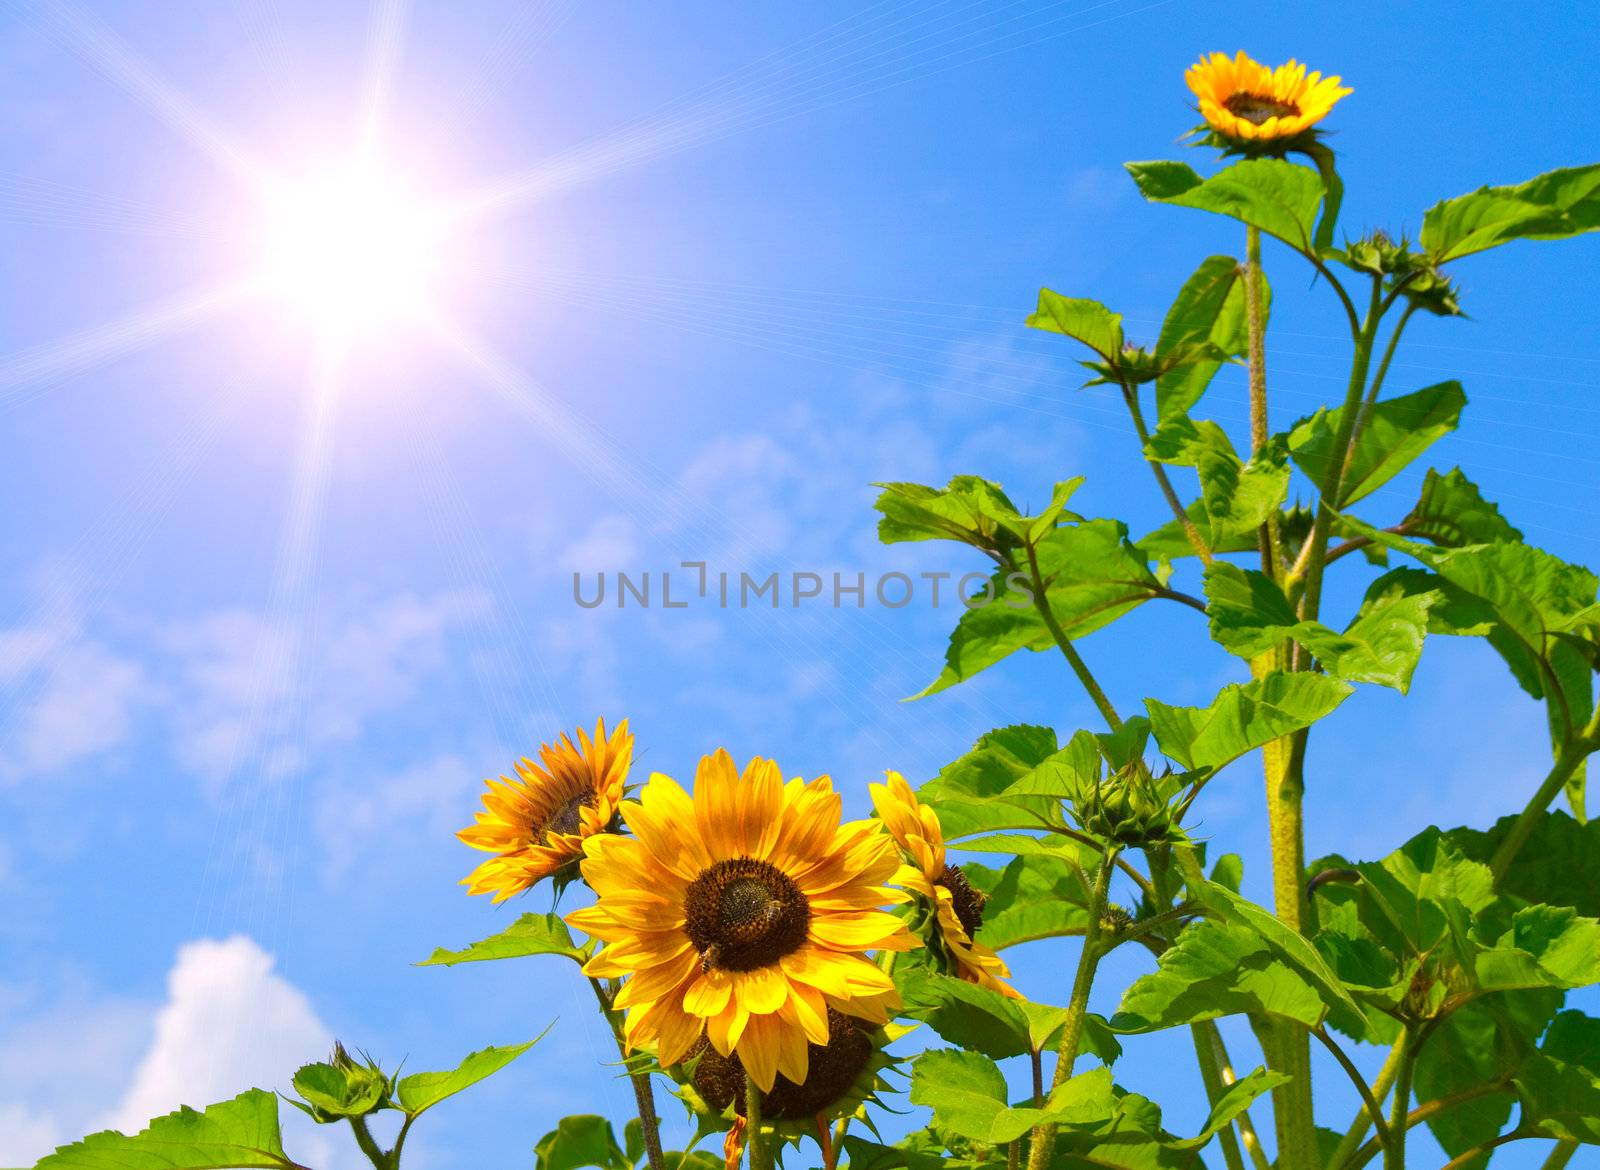 sunflowers on blue sky with sun by motorolka